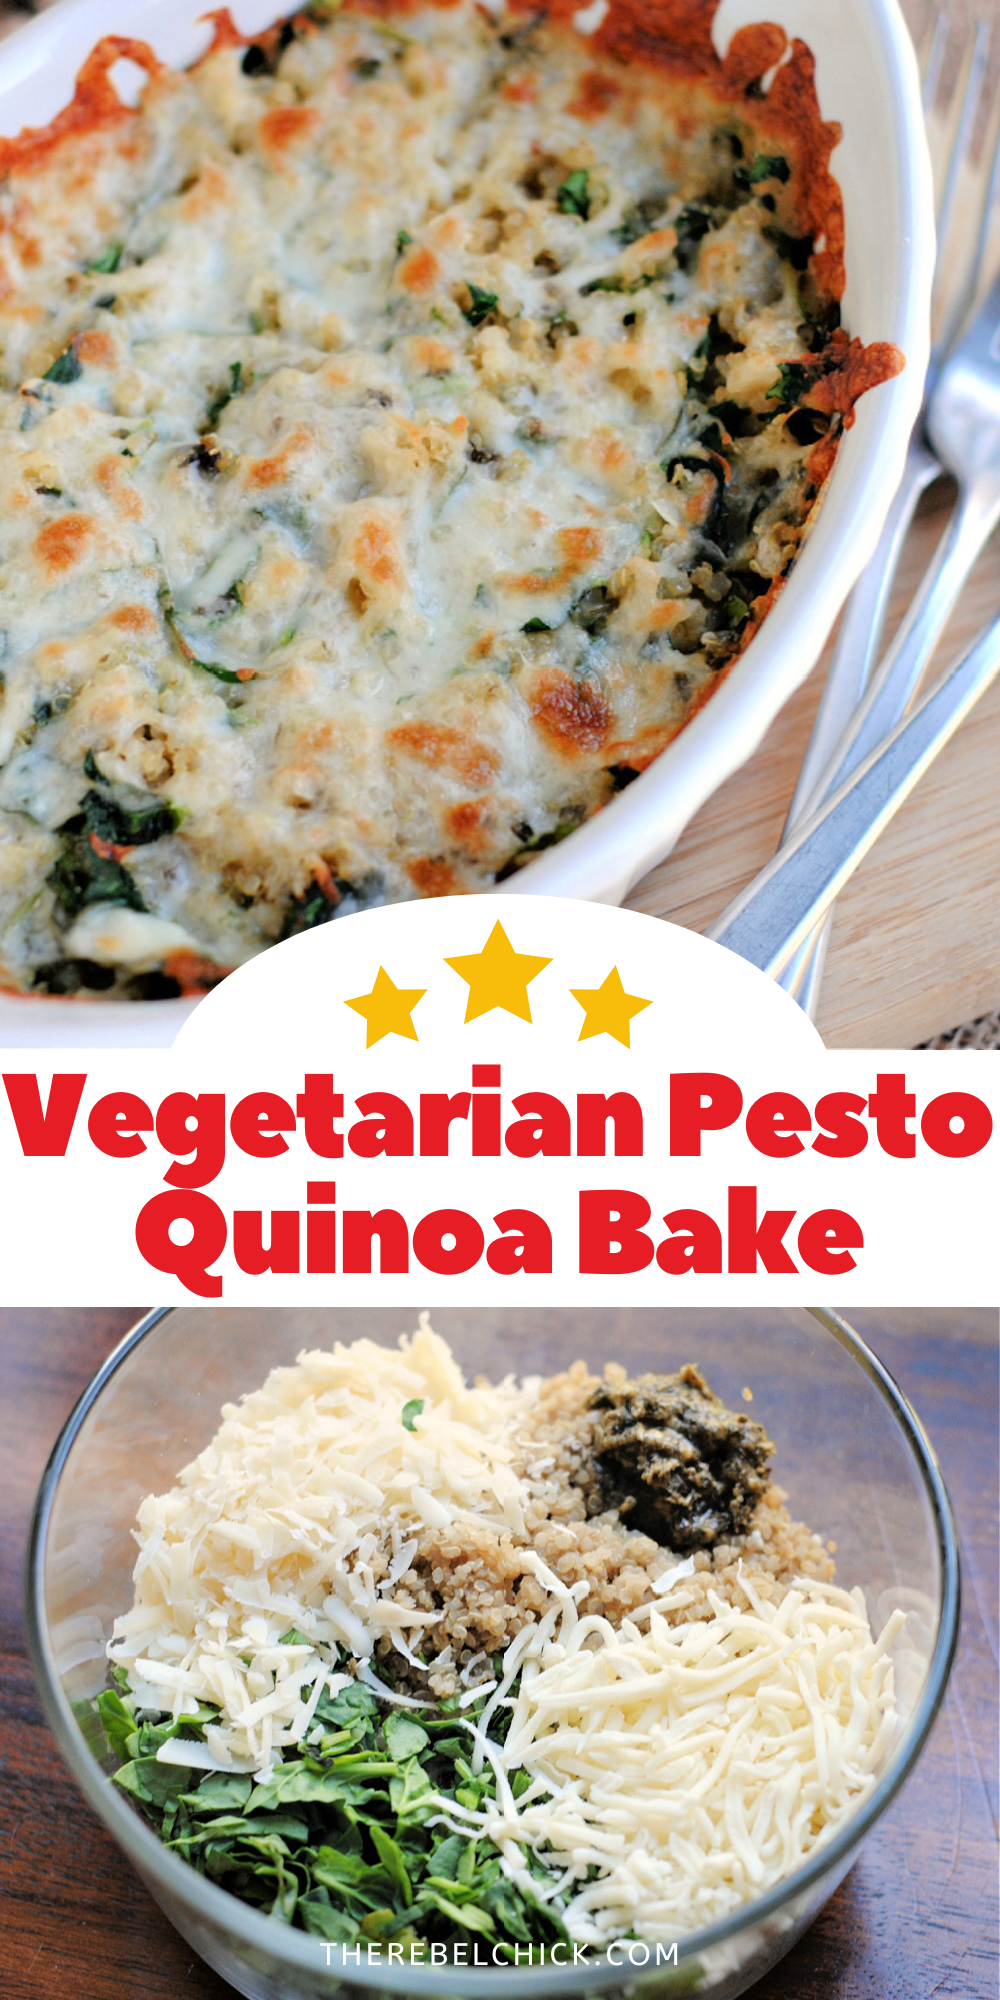 Meatless Monday Vegetarian Pesto Quinoa Bake Recipe